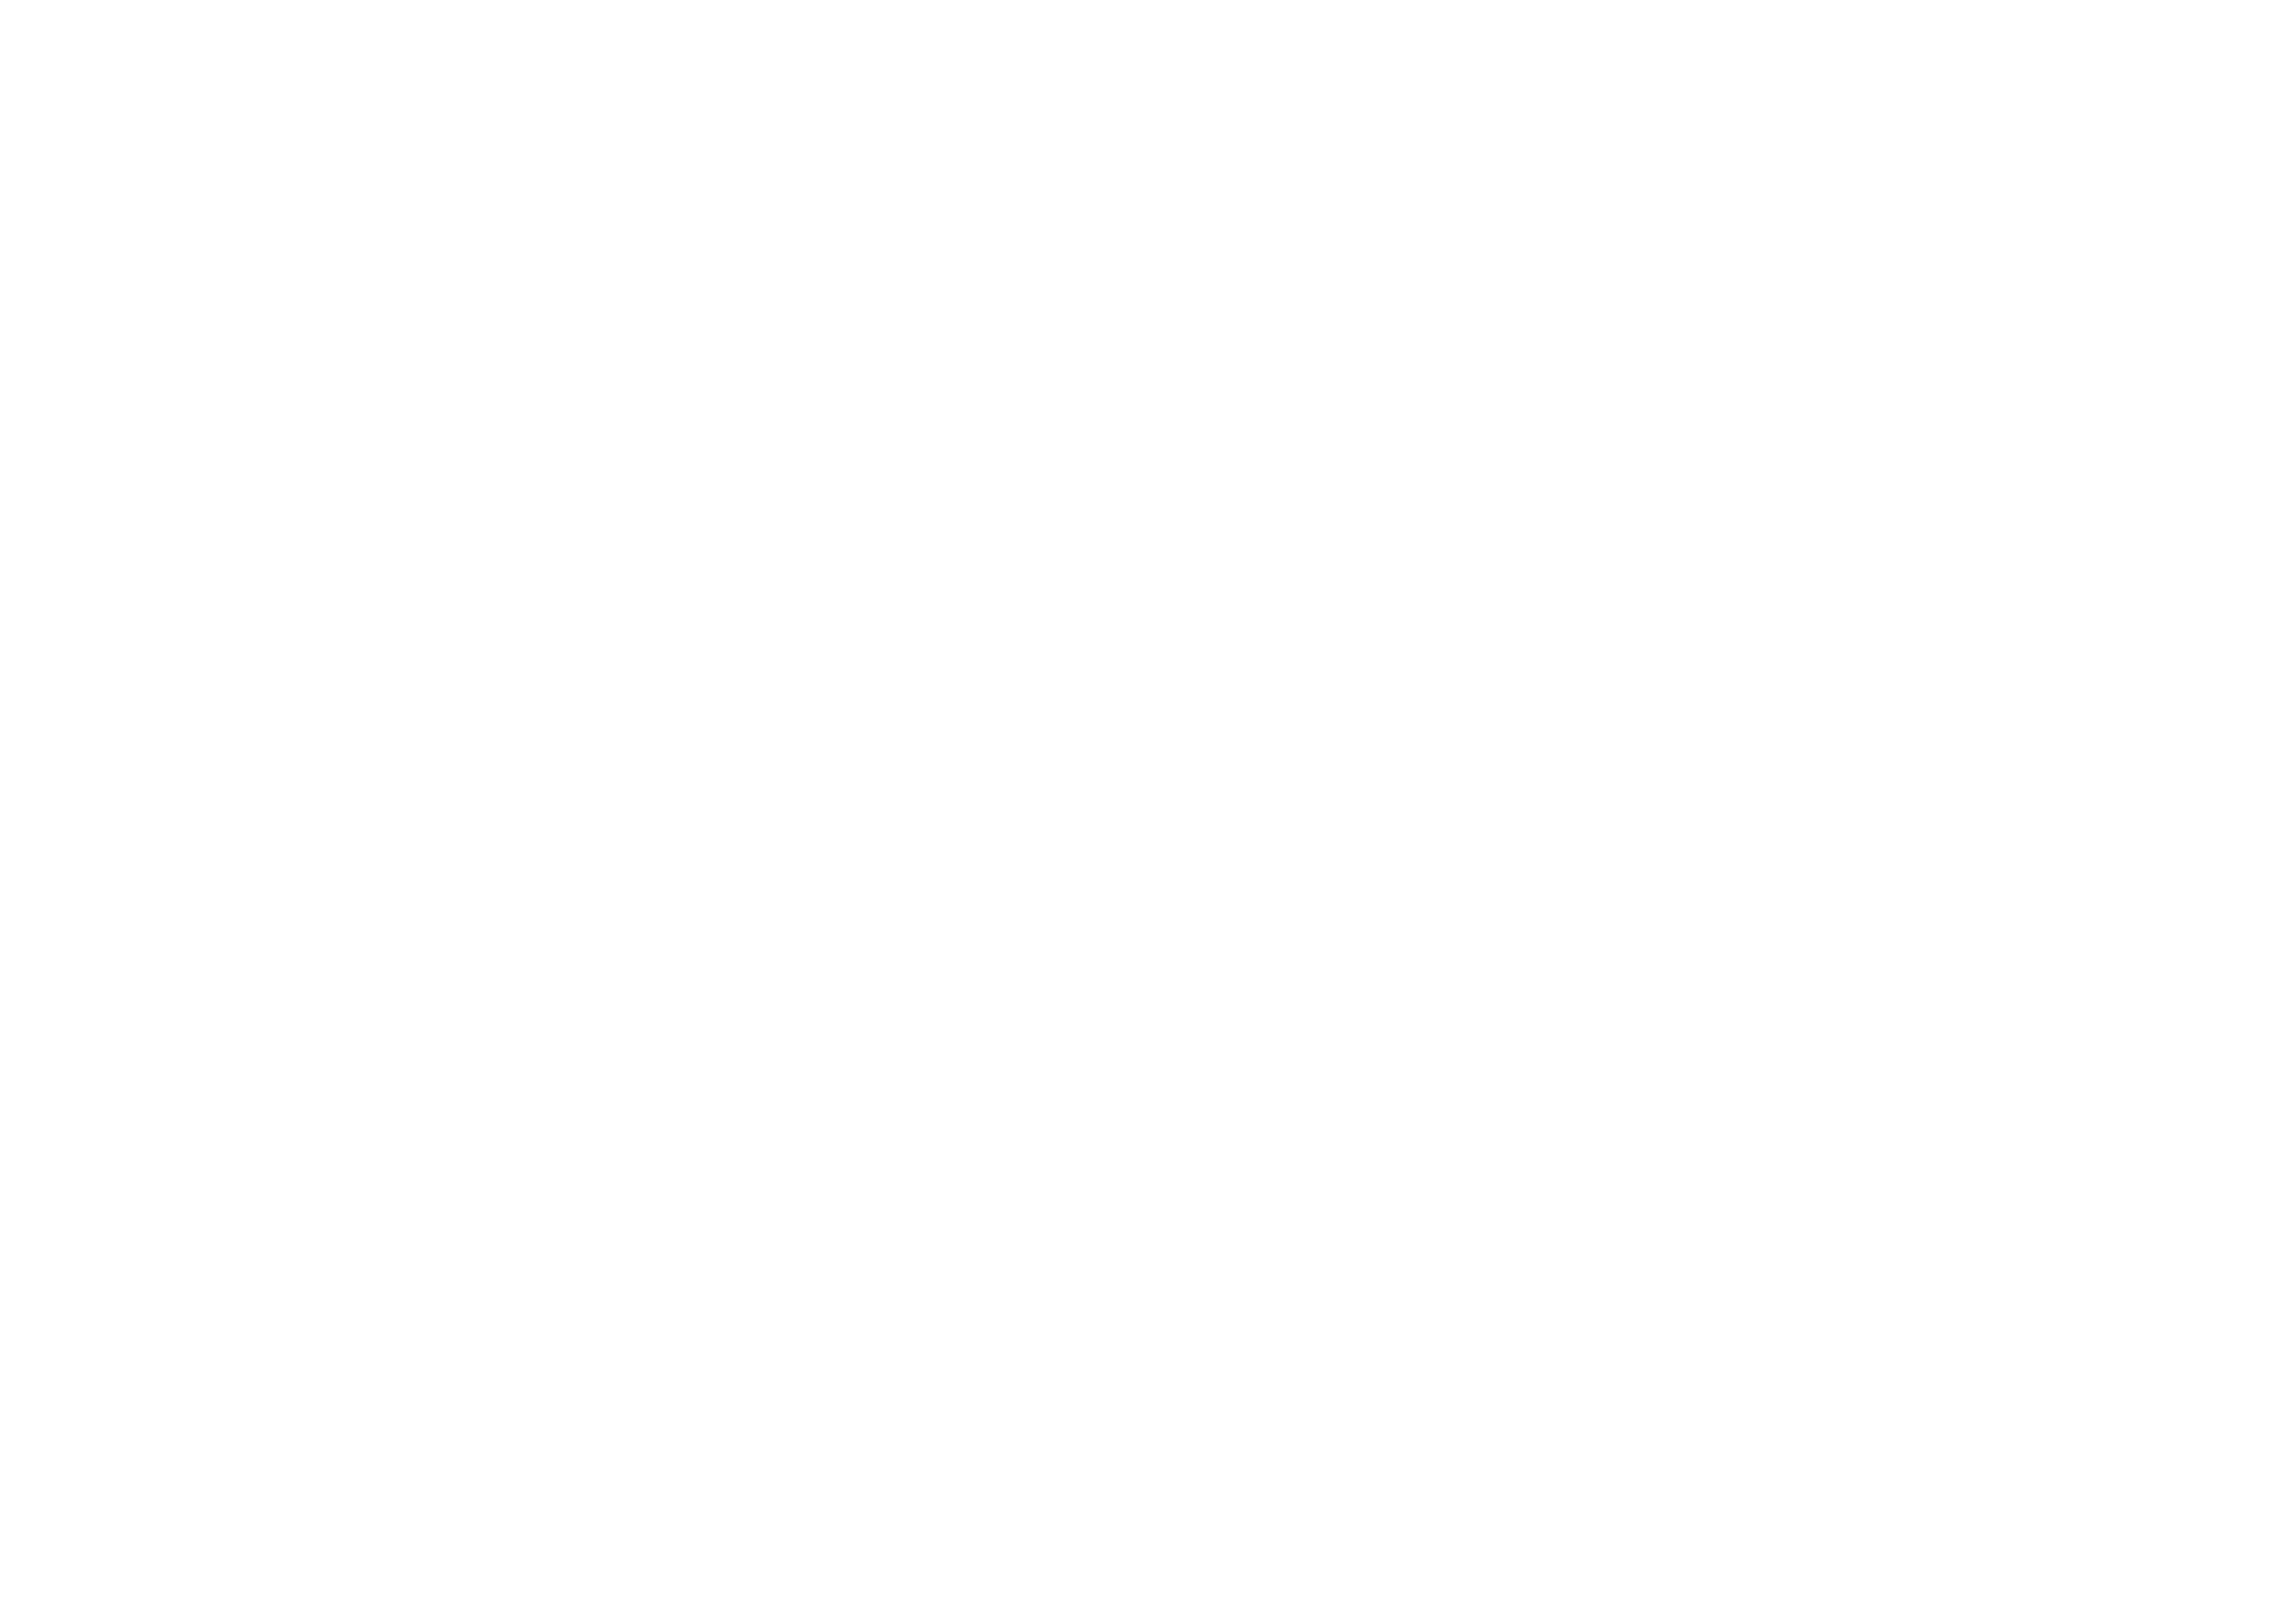 #2 most popular Firm in Latin America